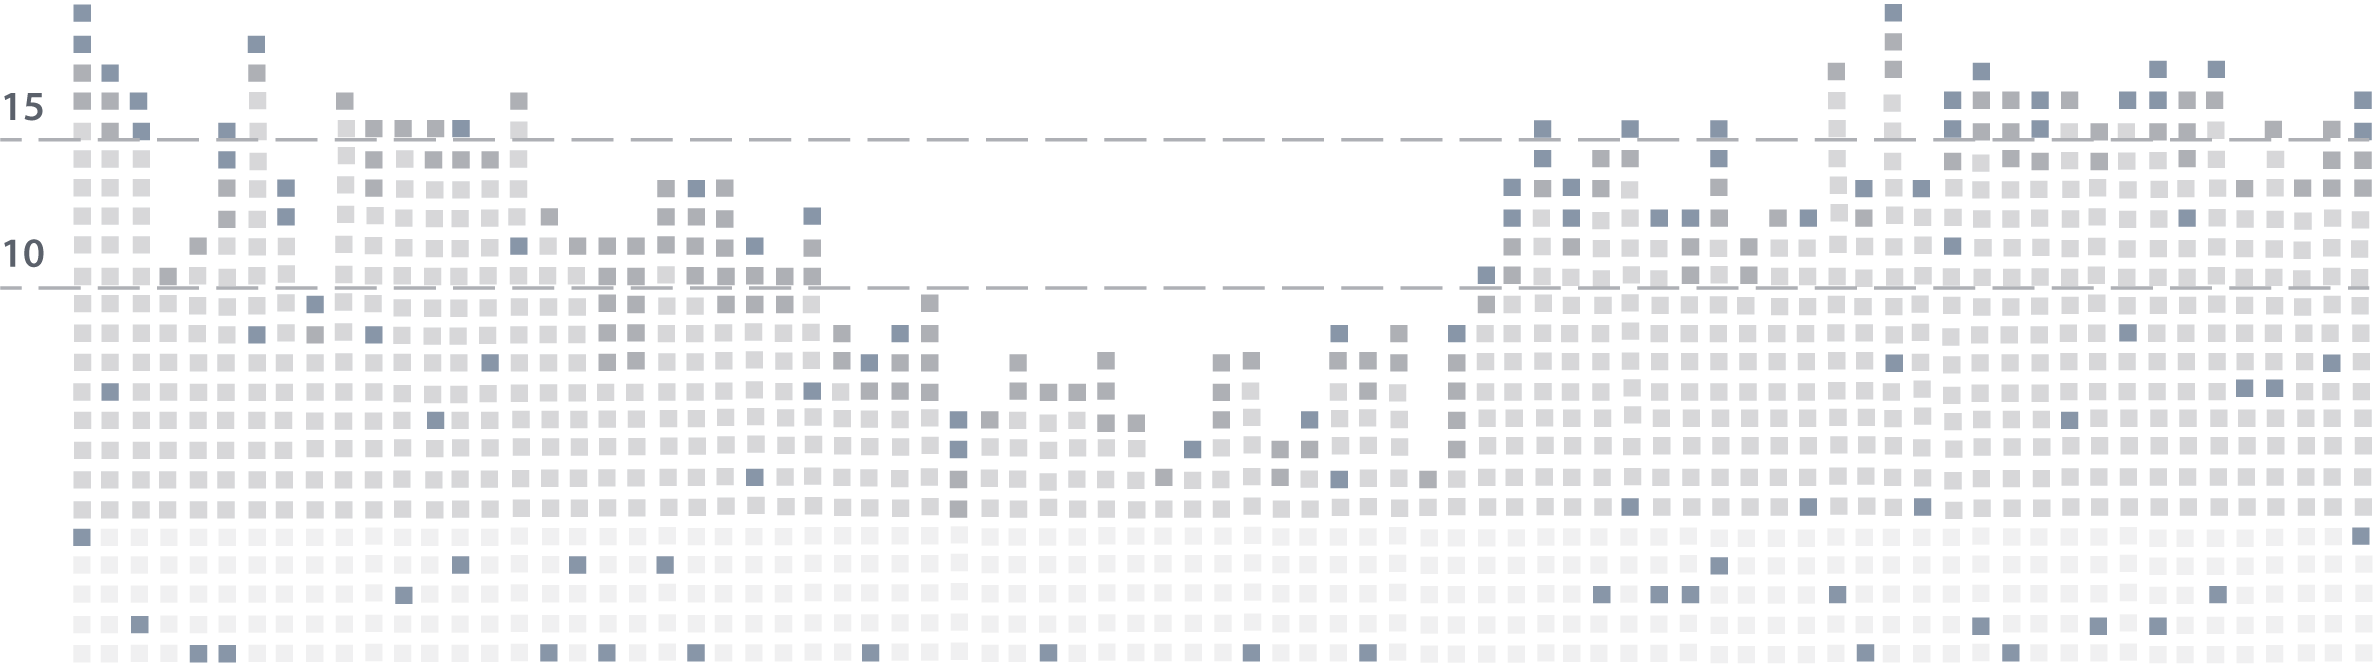 Bar graph of data